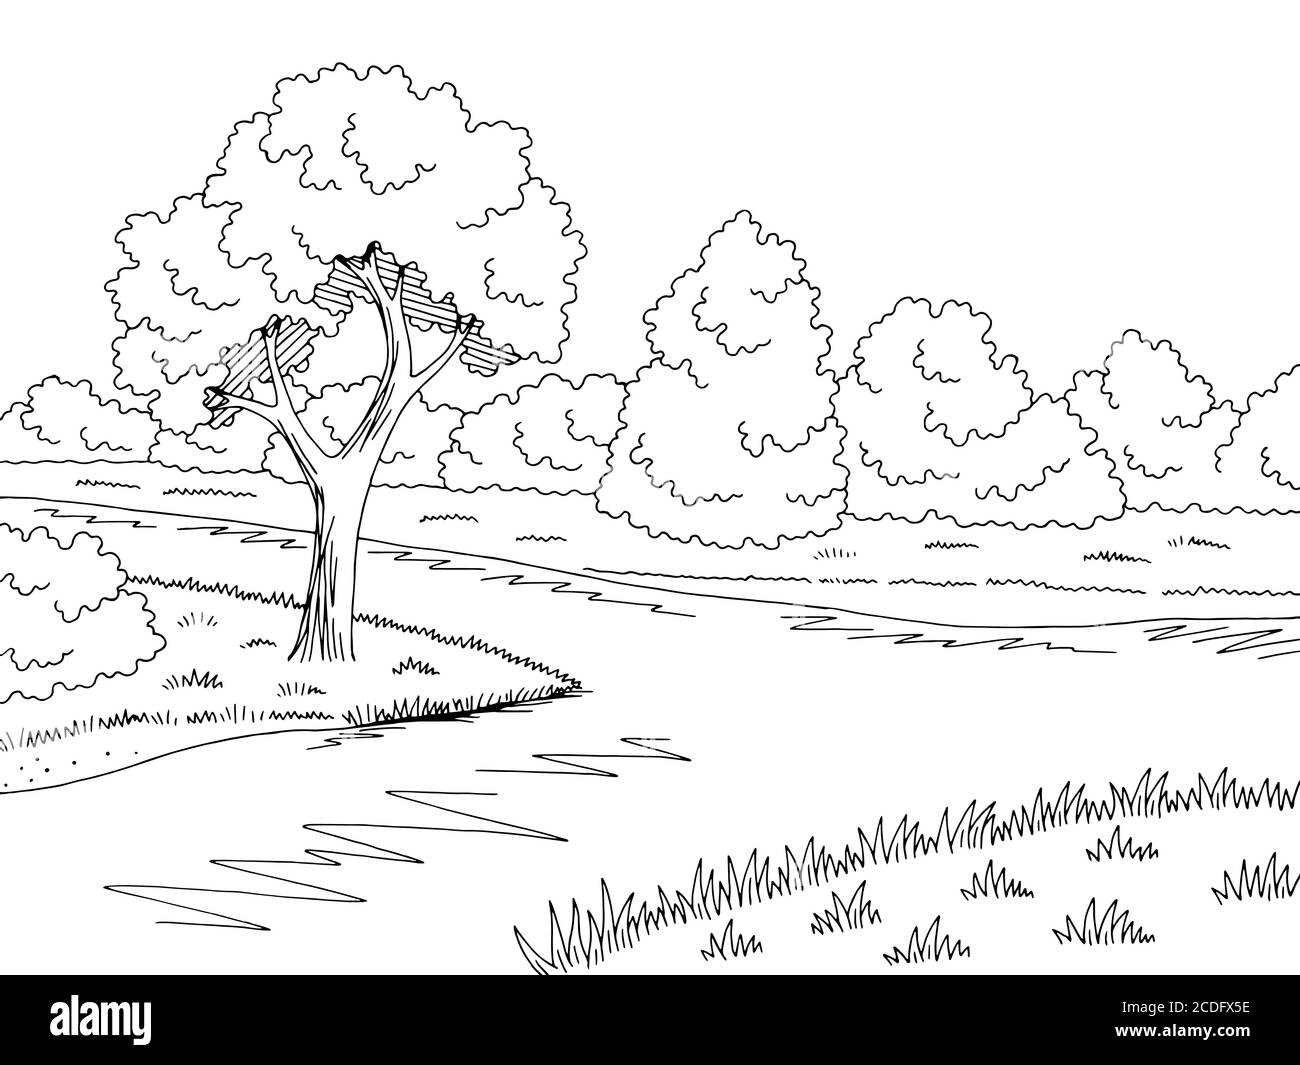 Forest river graphic black white landscape sketch illustration vector Stock Vector